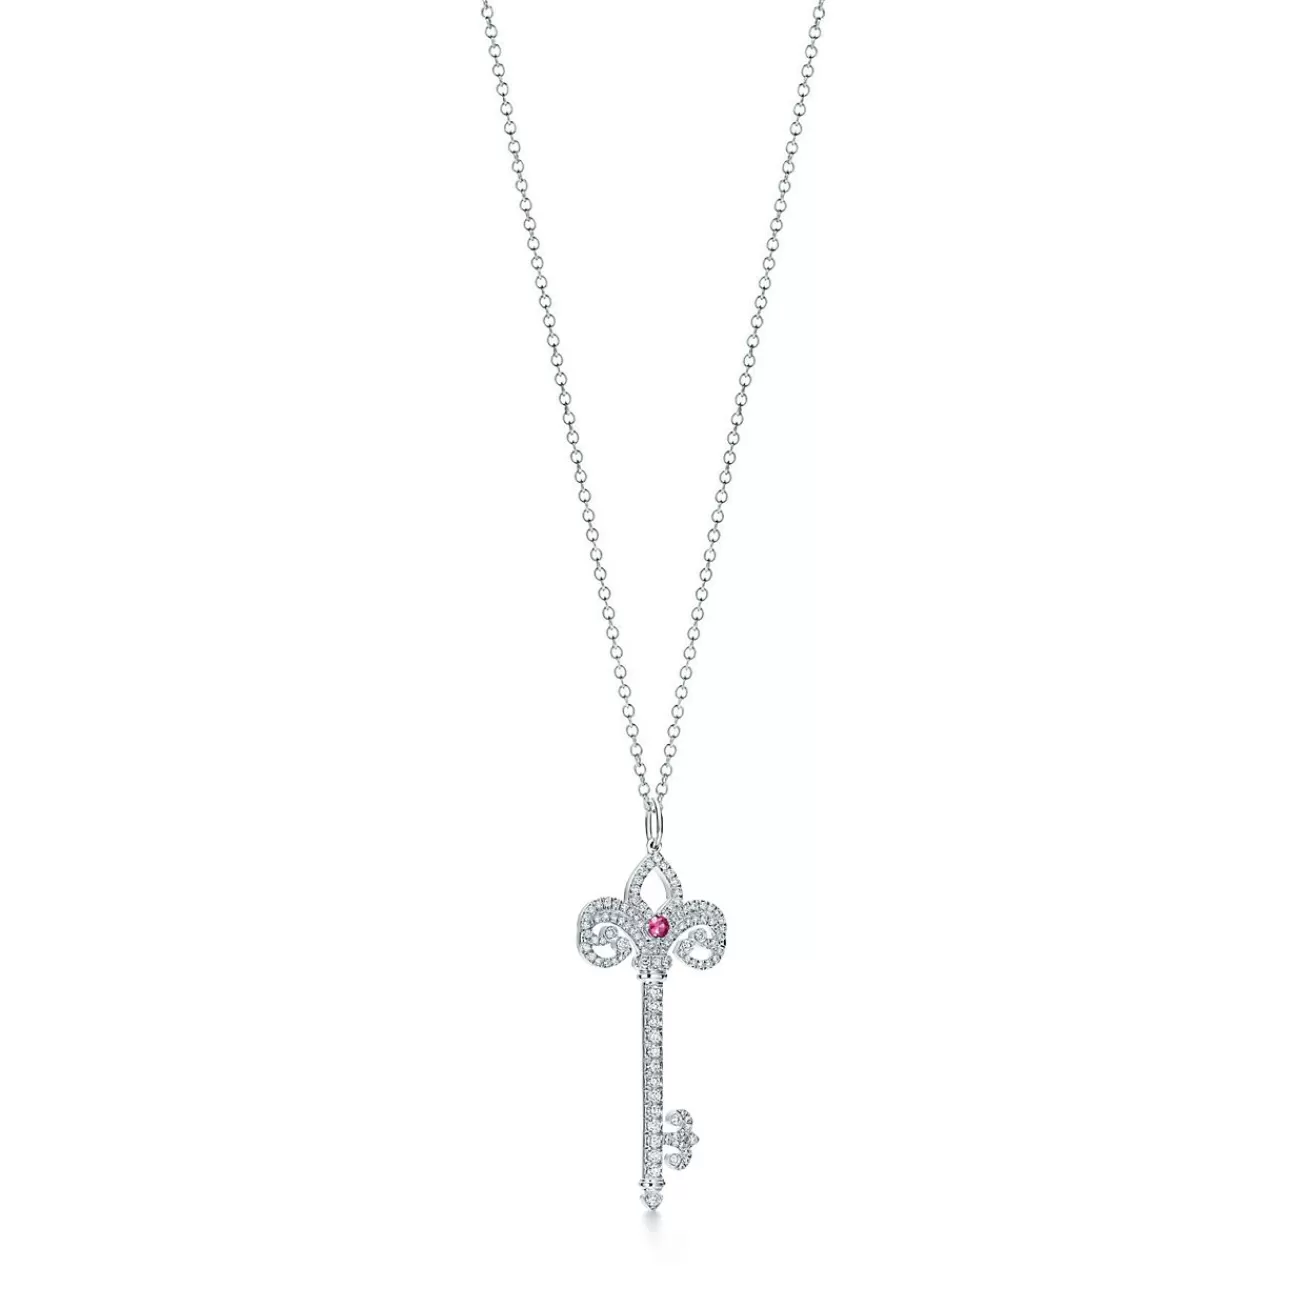 Tiffany & Co. Tiffany Keys Tiffany Fleur de Lis key pendant in platinum with gemstones. | ^ Necklaces & Pendants | Platinum Jewelry